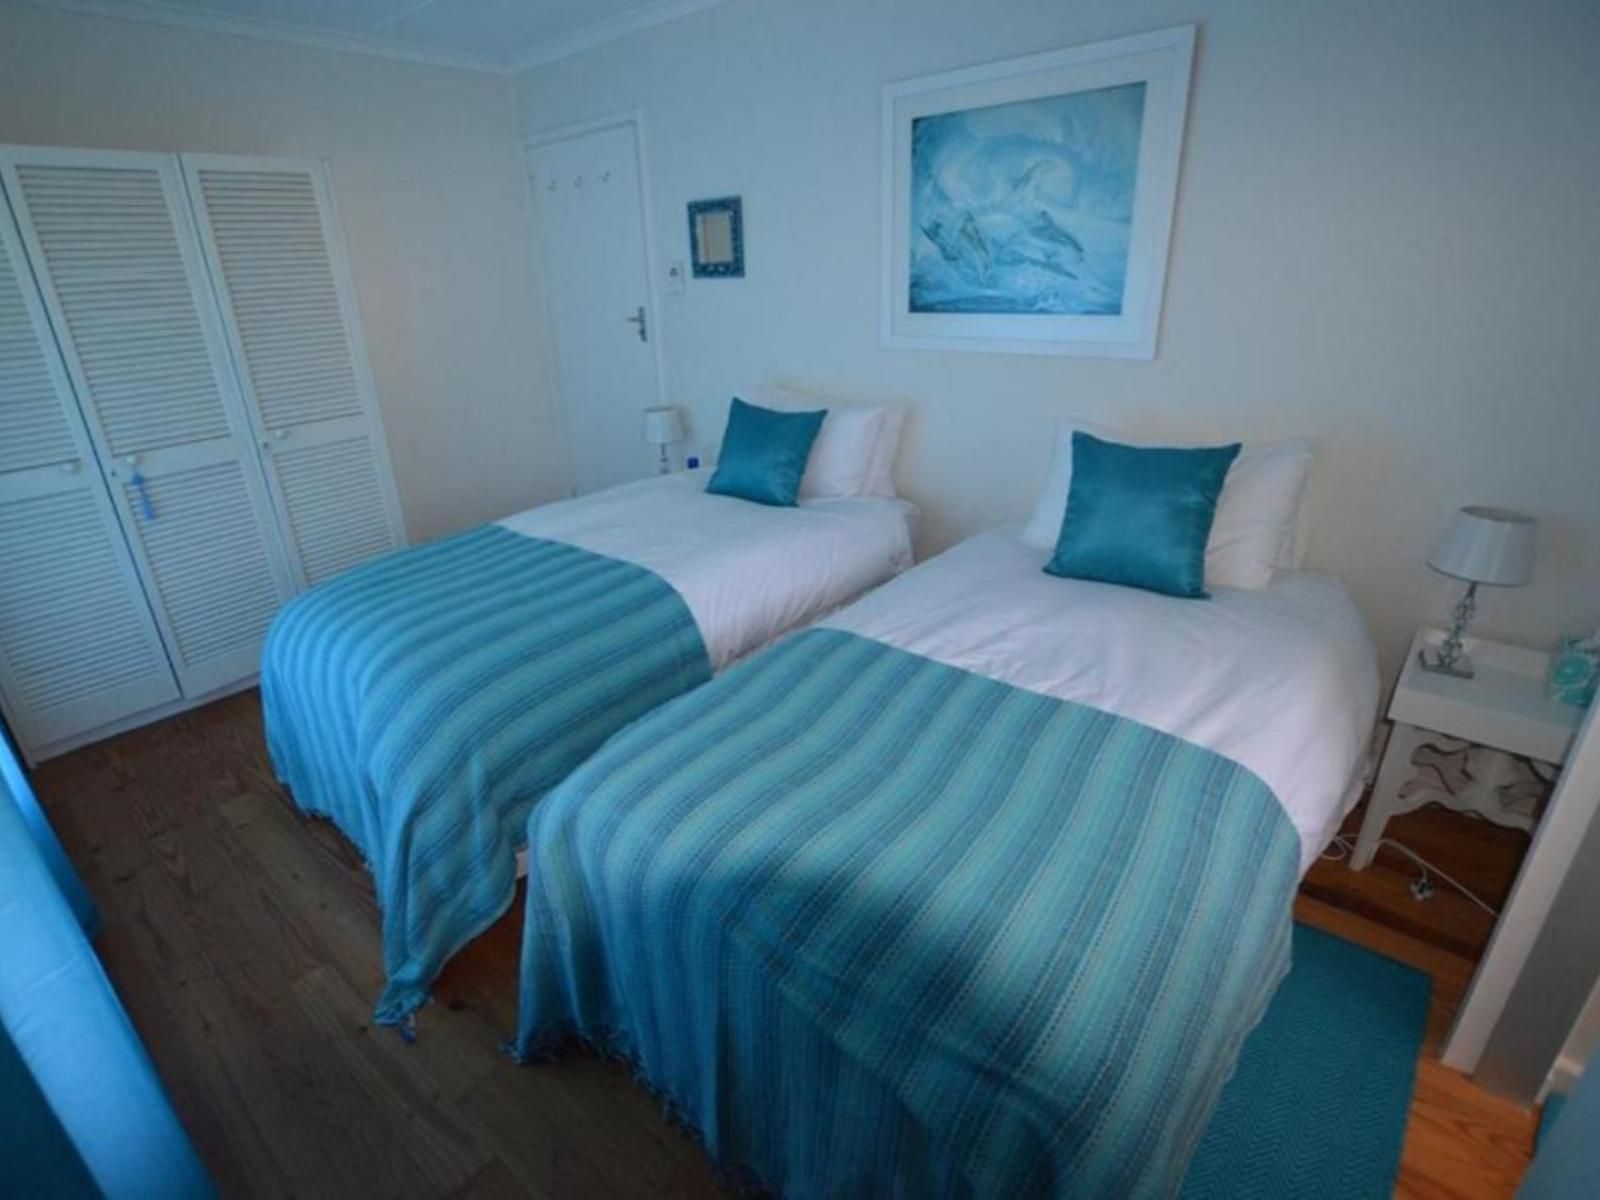 Mermaid S Tail Pringle Bay Pringle Bay Western Cape South Africa Bedroom